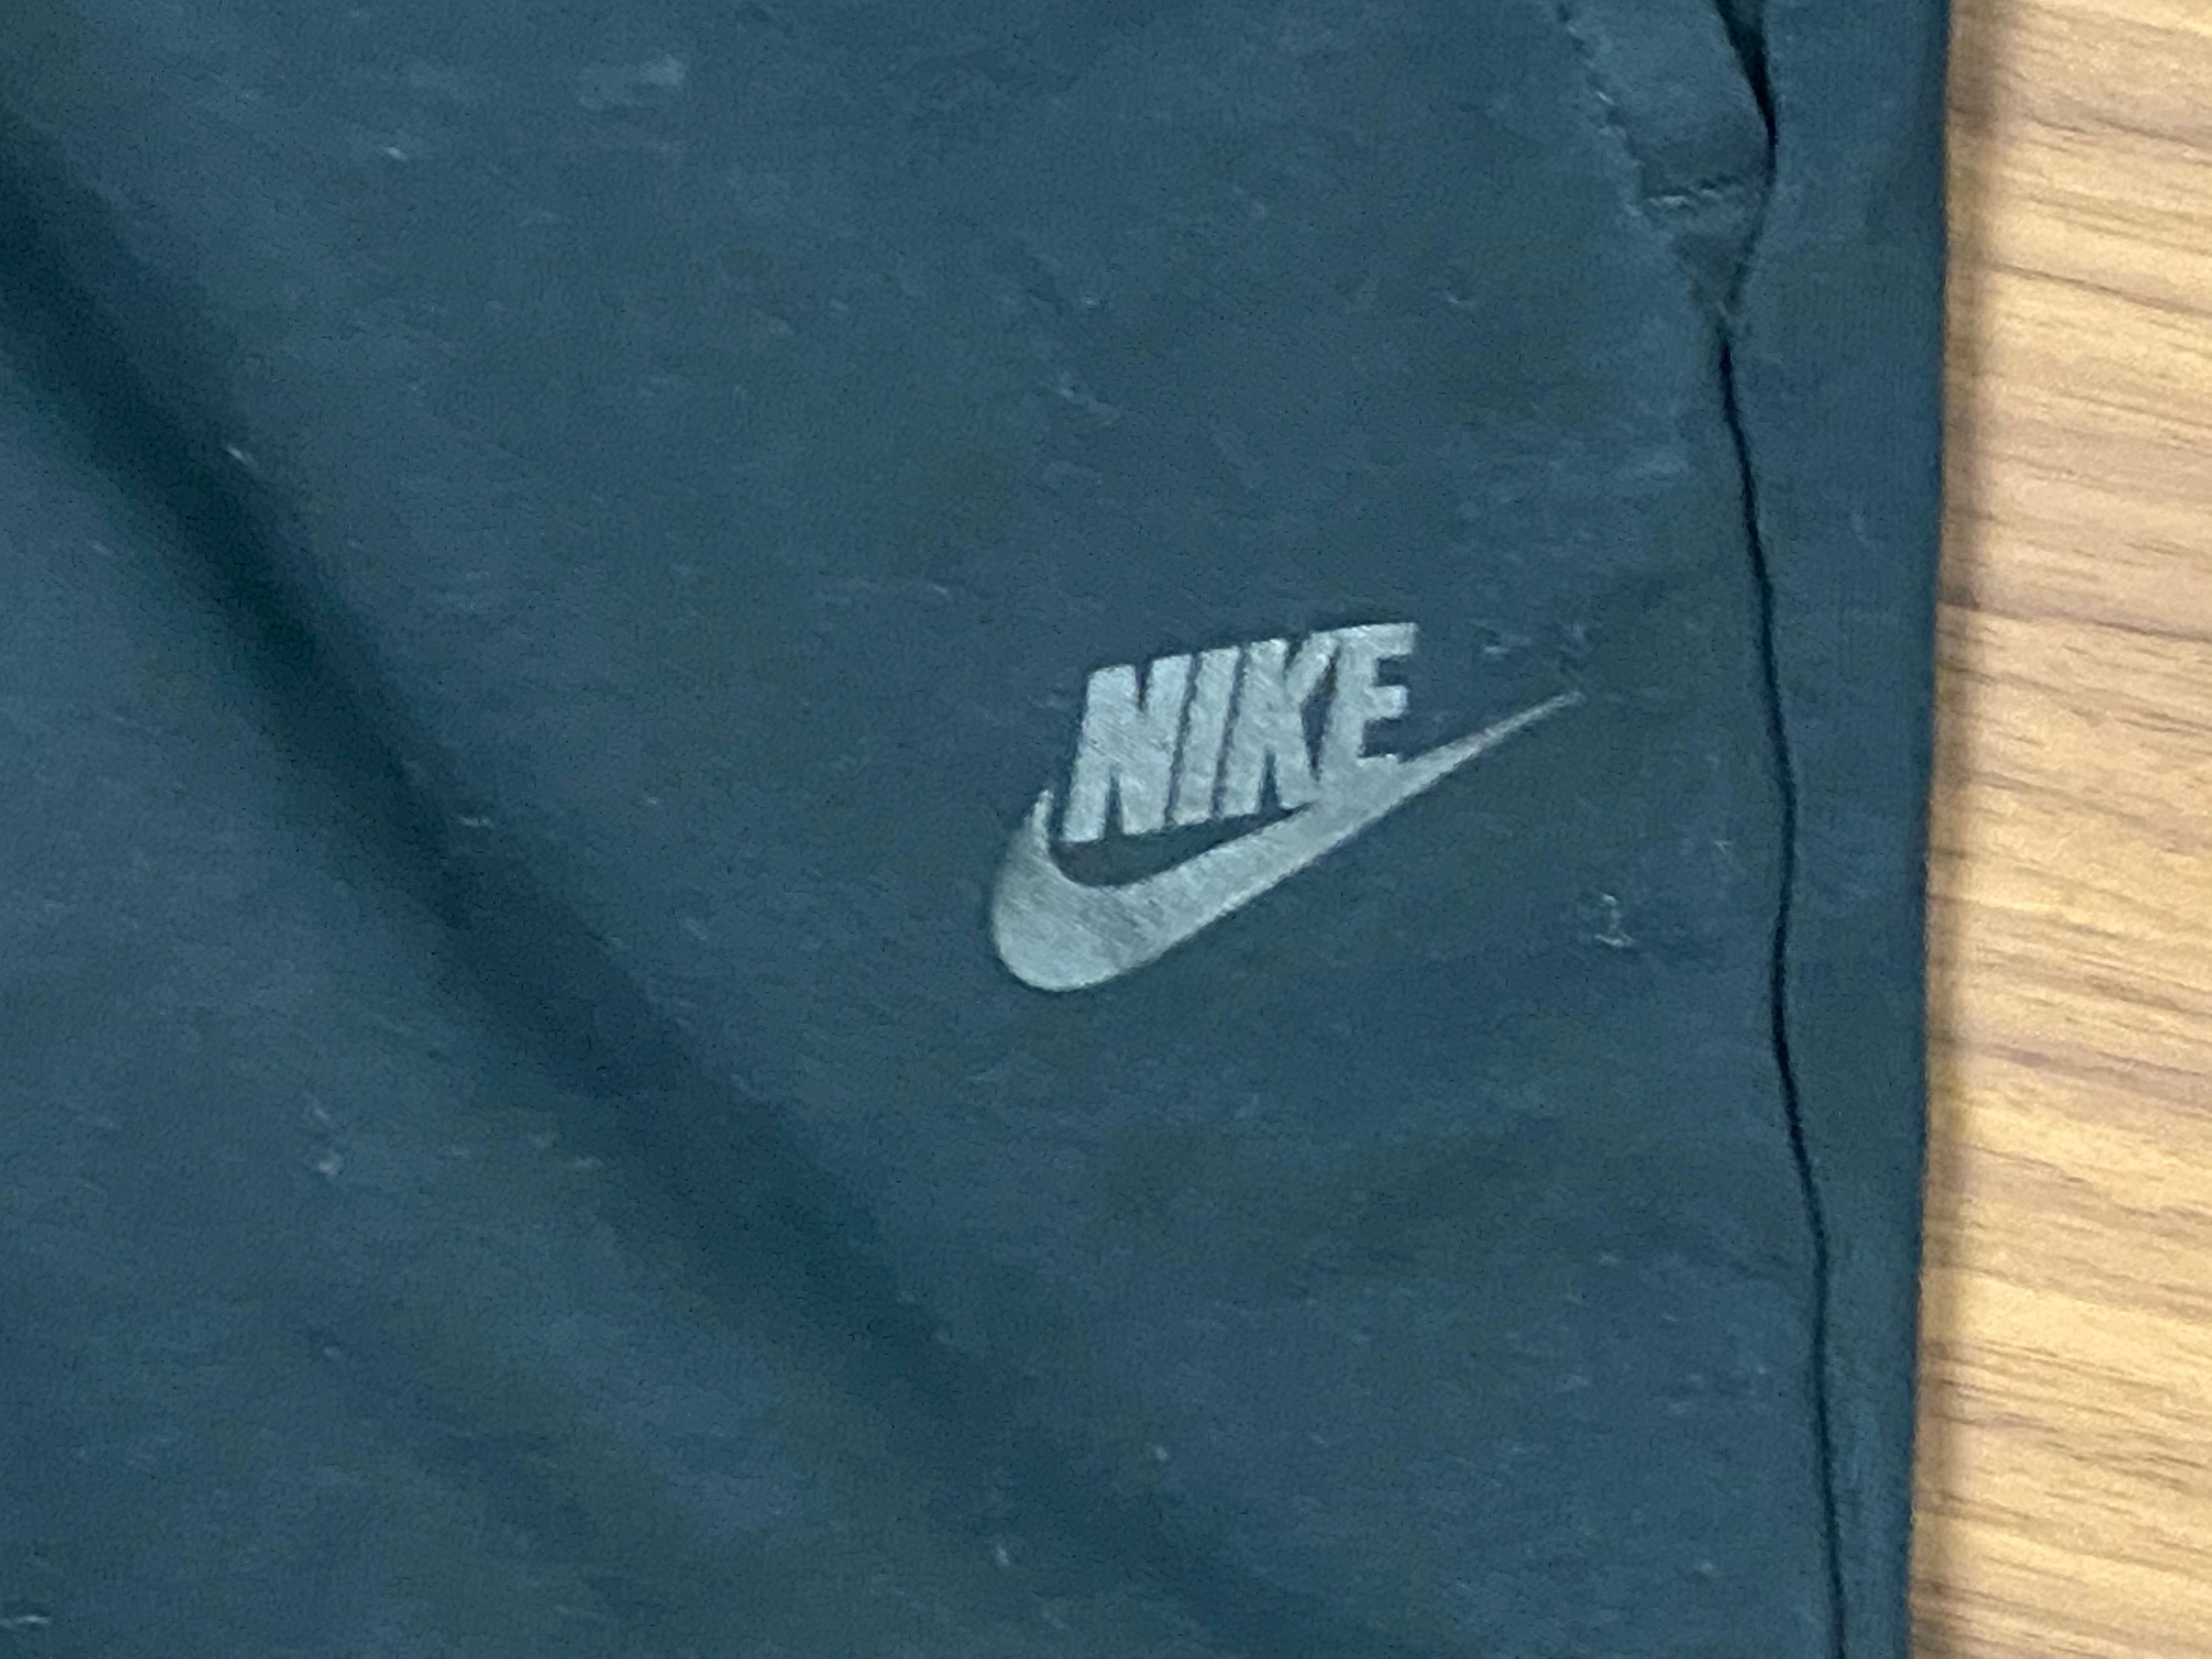 Nike Sweat Shorts - Black